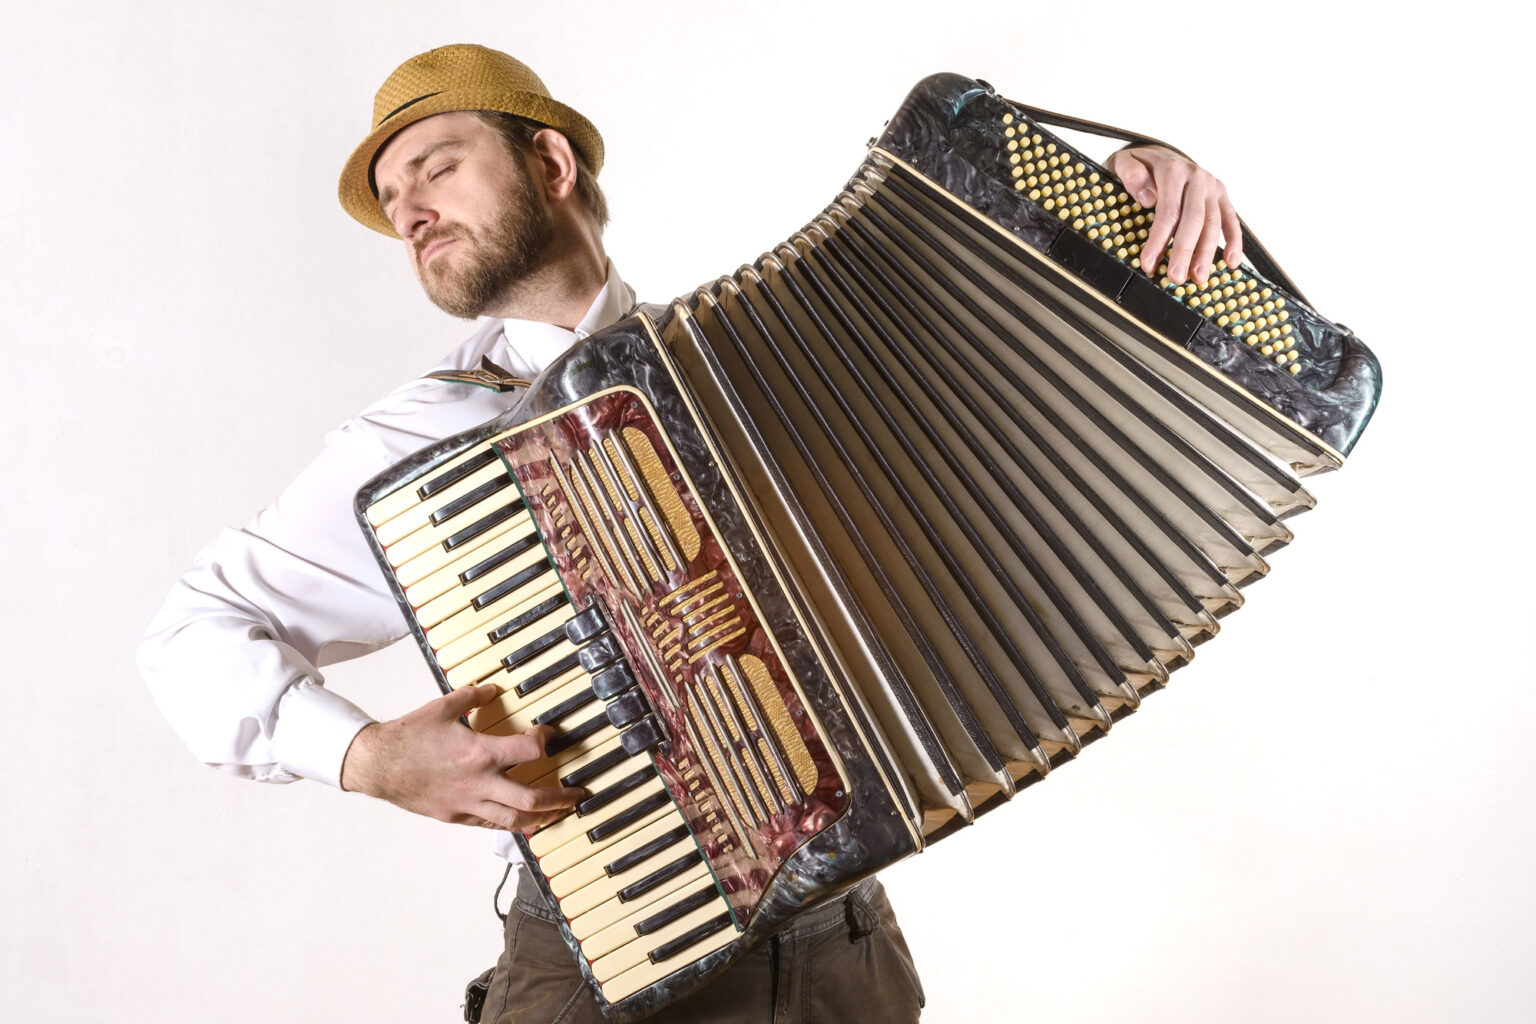 Dick kokich accordion player